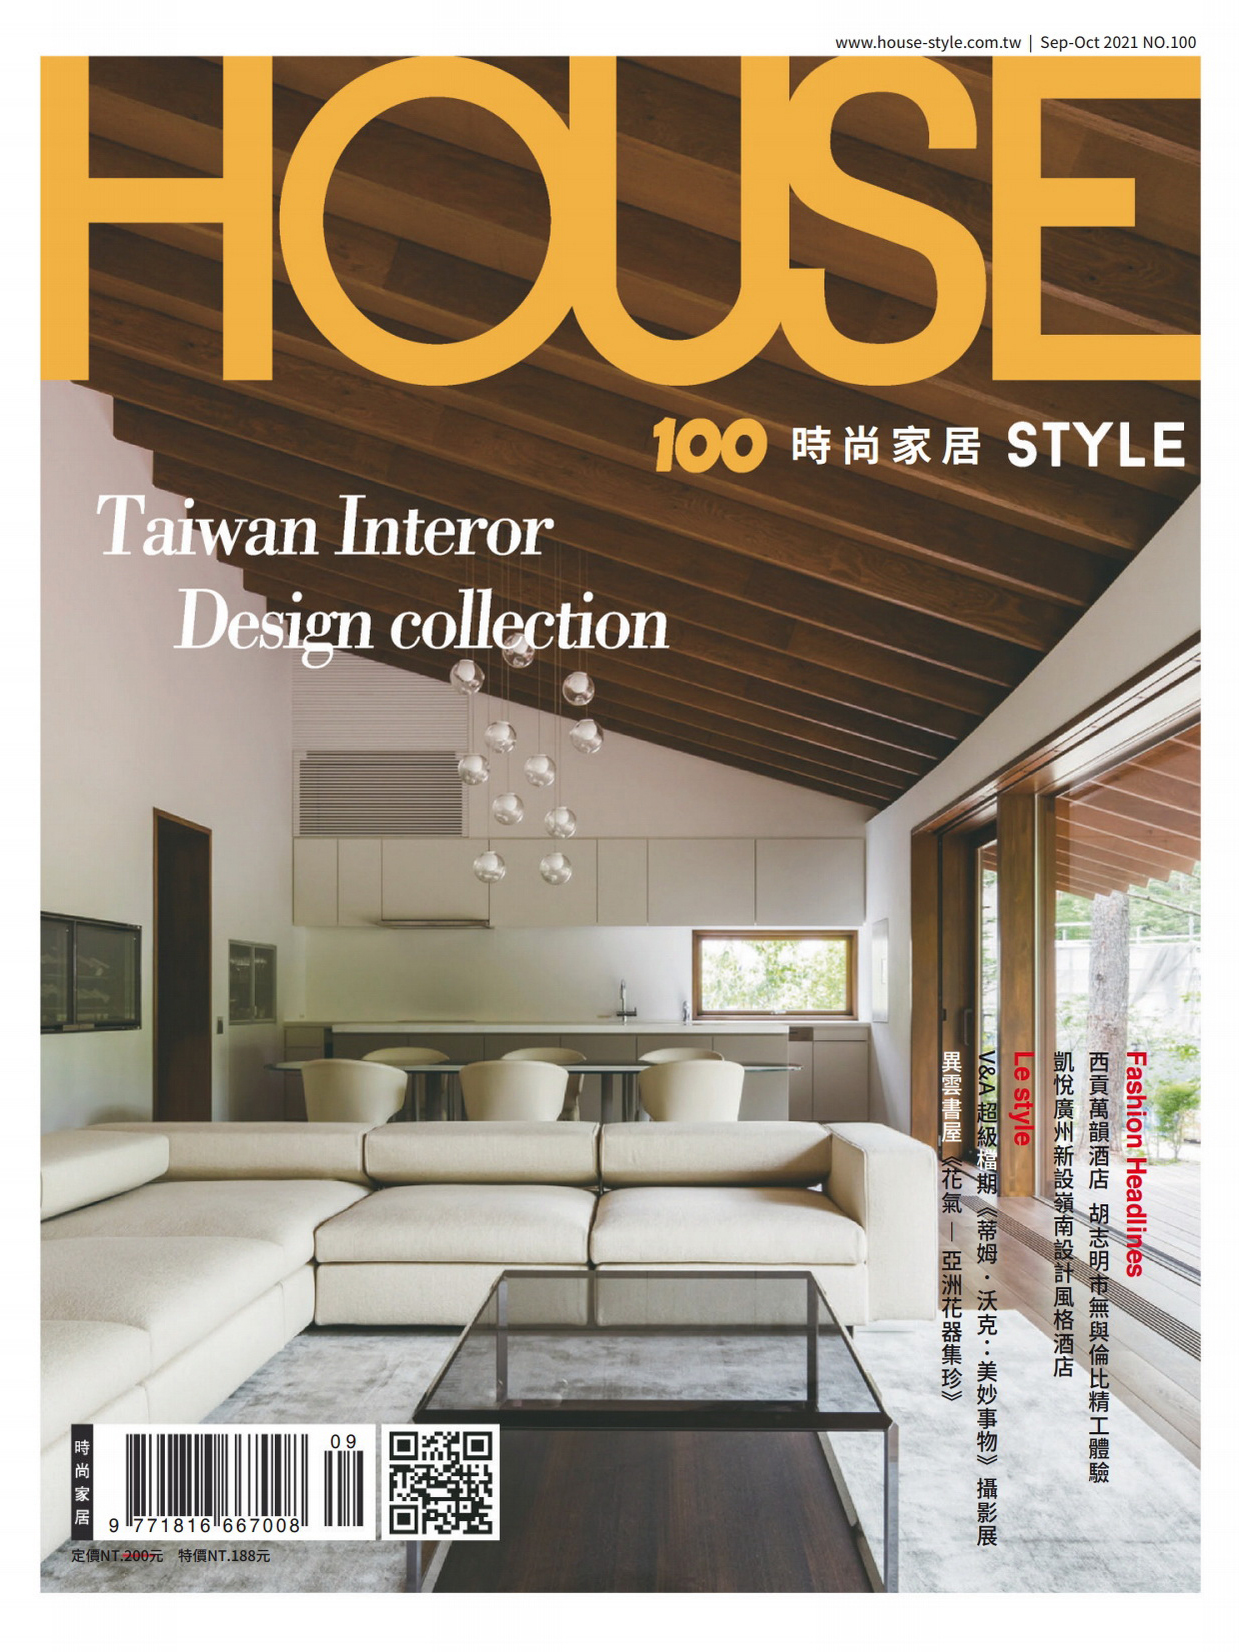 《House Style 時尚家居》台湾家居设计流行趋势杂志2021年09-10月号